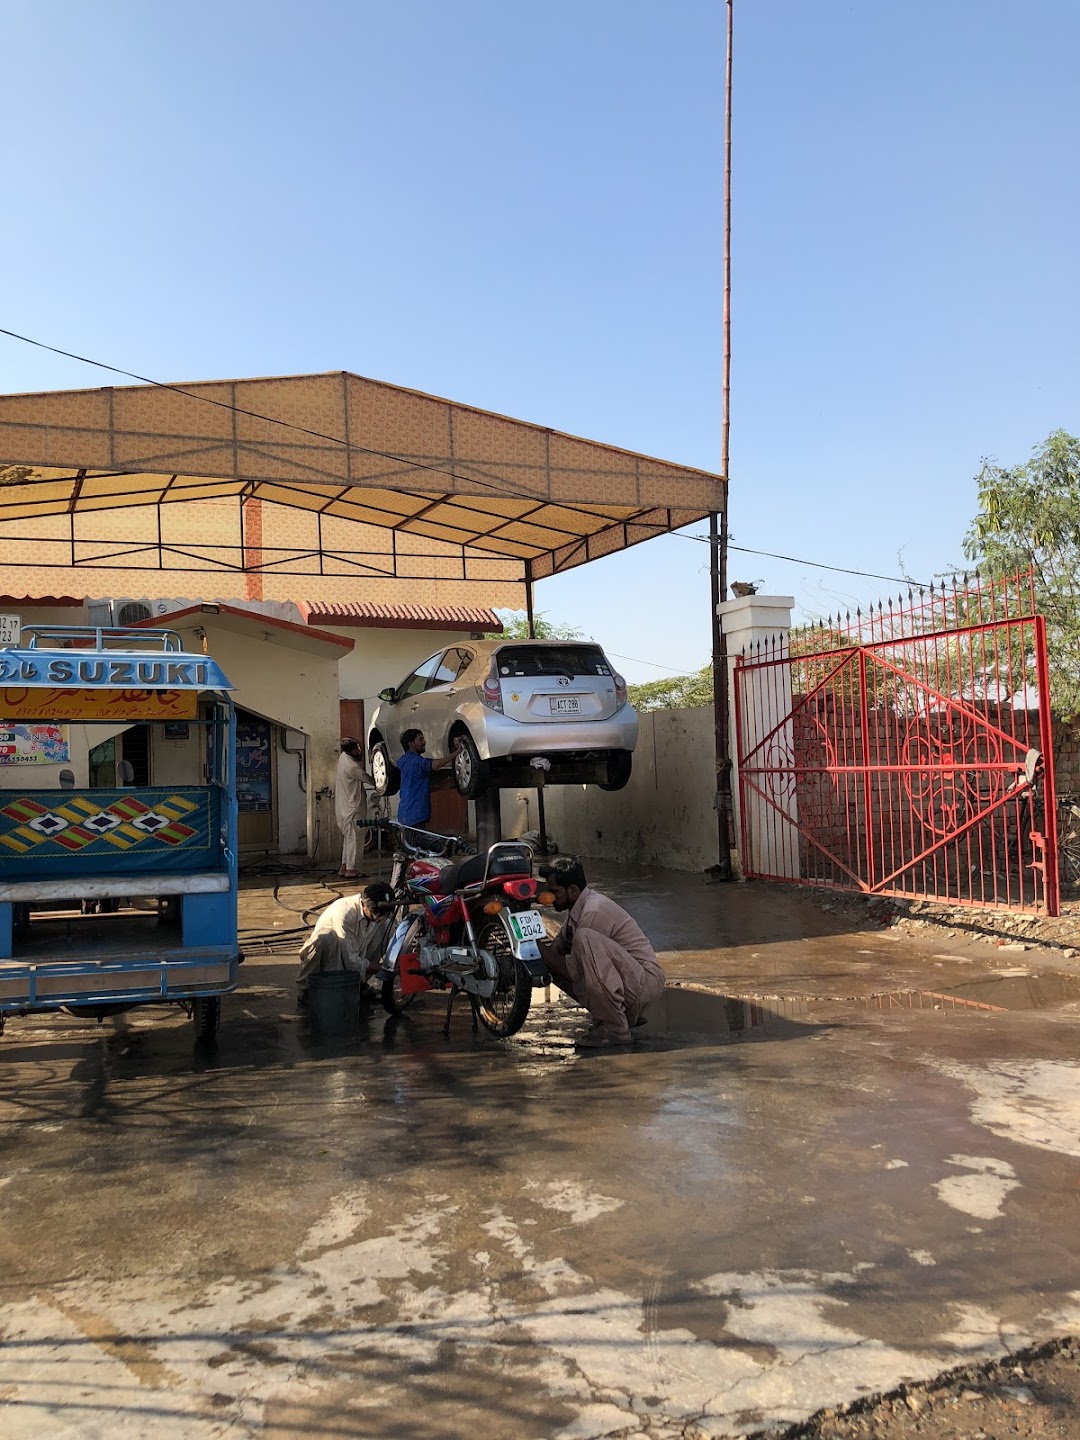 RANDHAWA REAL ESTATE & car wash